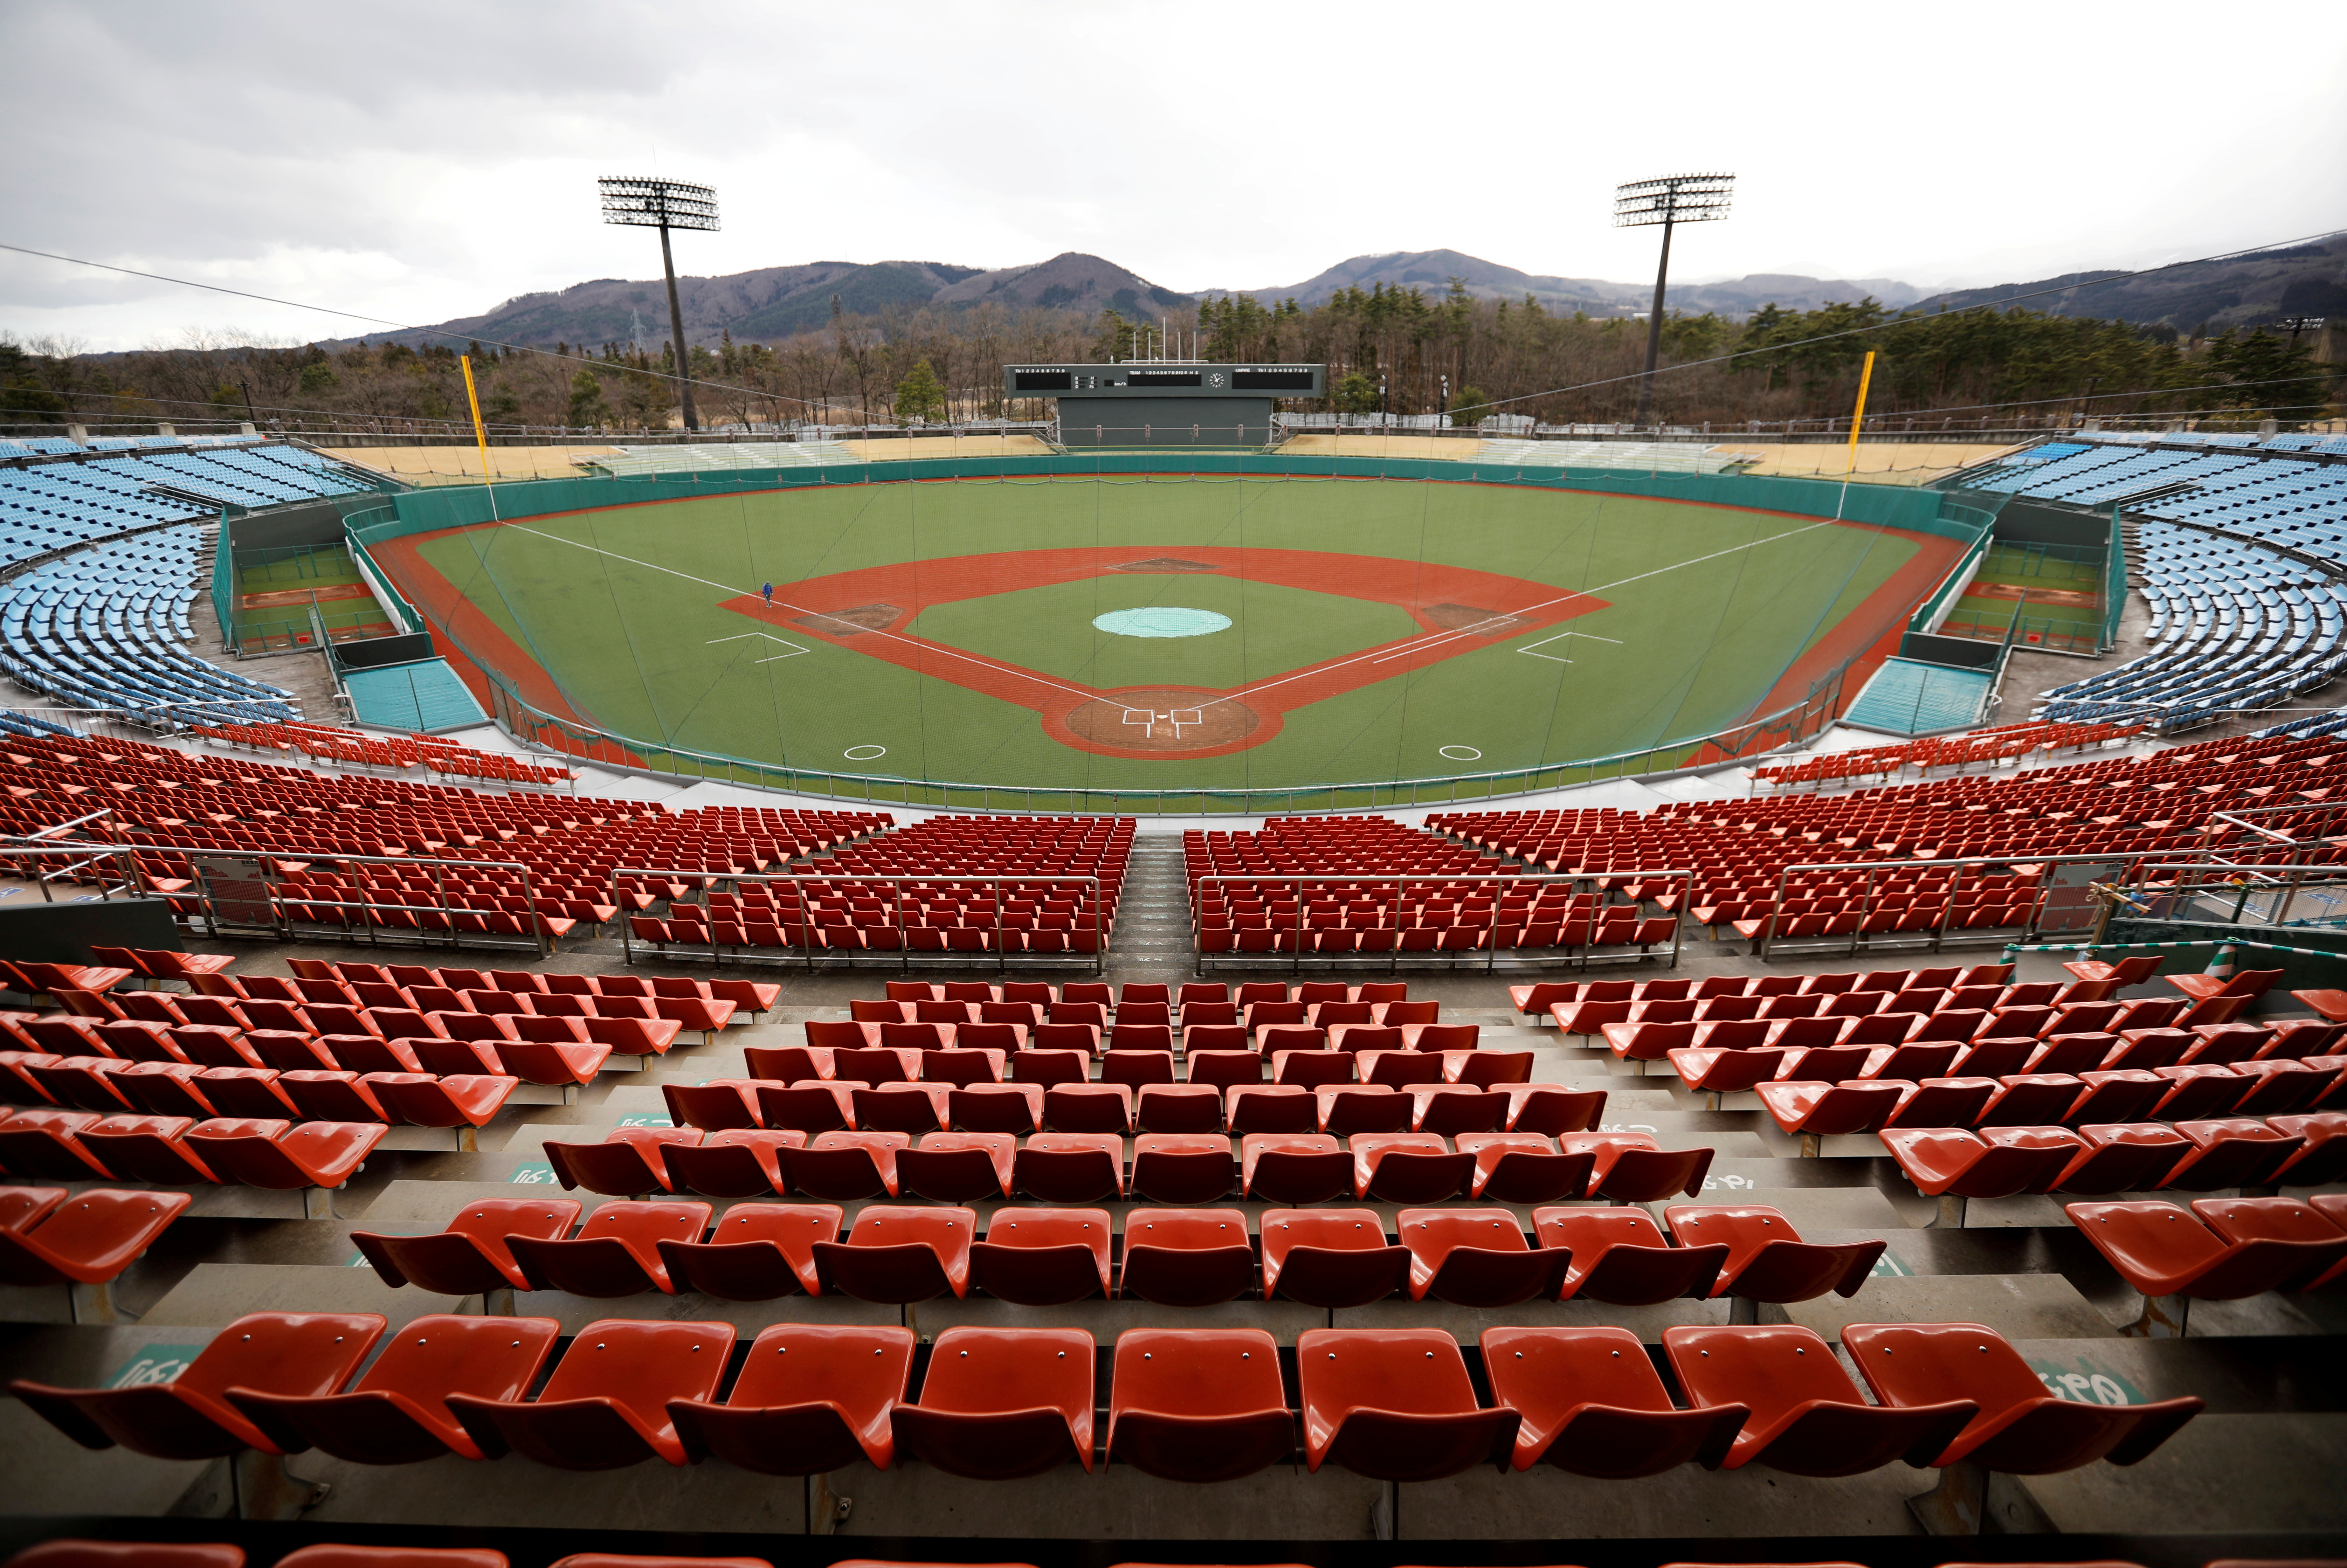 Fukushima Azuma Baseball Stadium which will host the baseball and softball competitions in Tokyo 2020 Olympic Games, is seen in Fukushima, Japan